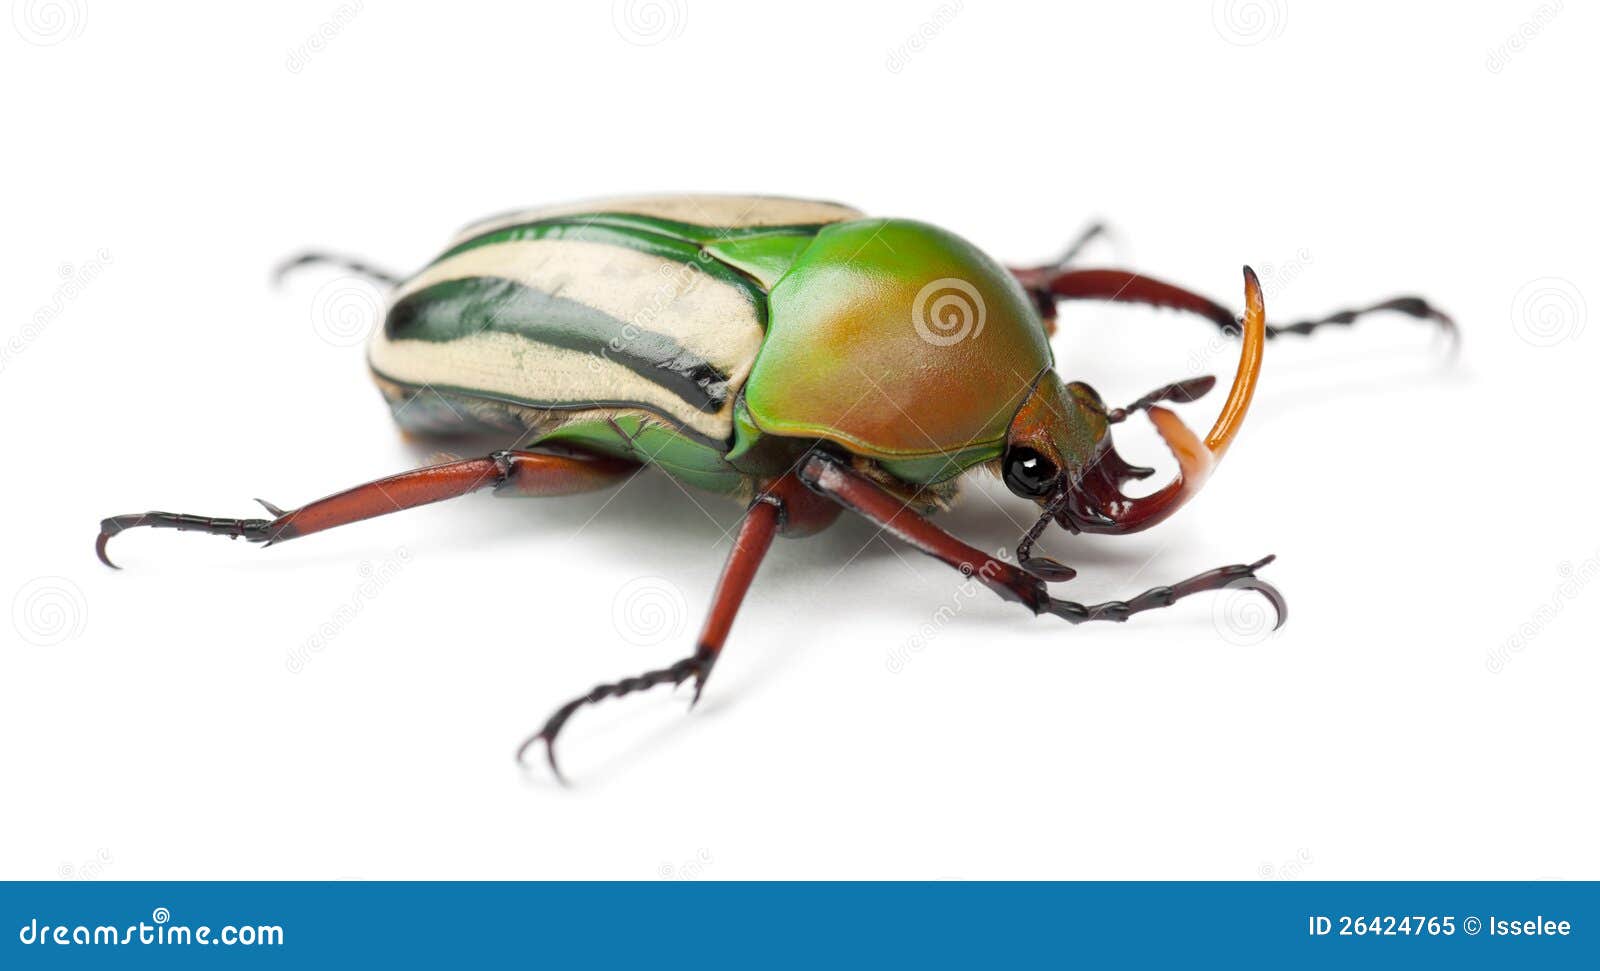 male flamboyant flower beetle